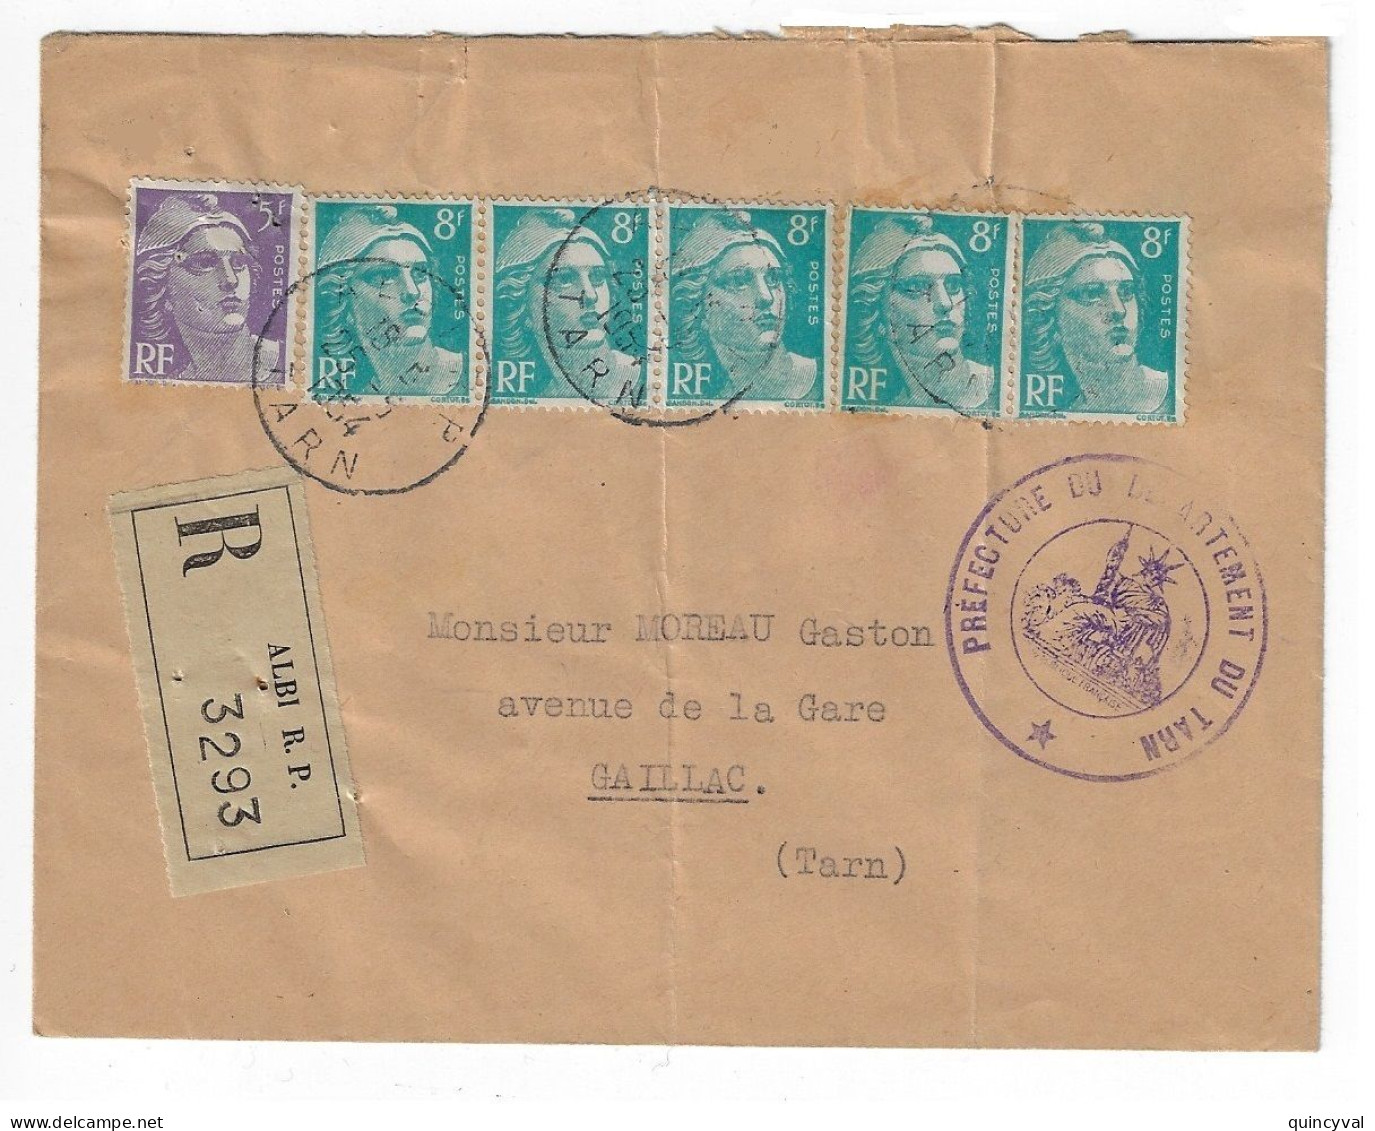 ALBI R. P. Tarn Lettre Recommandée Préfecture Gandon 8 F Emeraude 5 F Violet Yv 883 810 Ob 25 5 1954 - Lettres & Documents